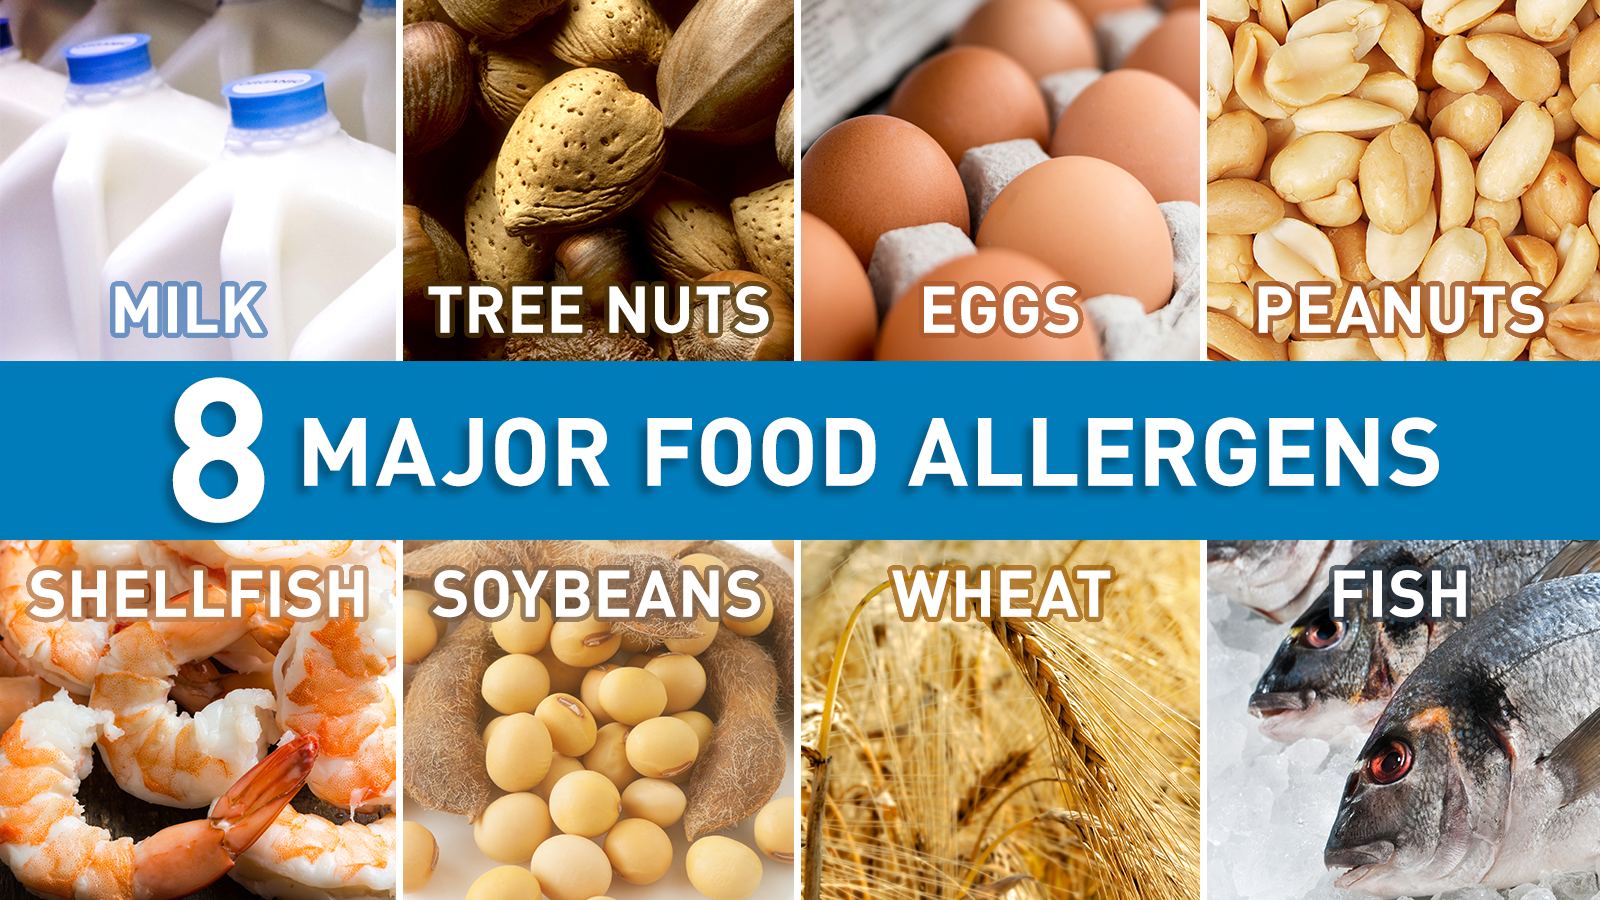 Food allergens